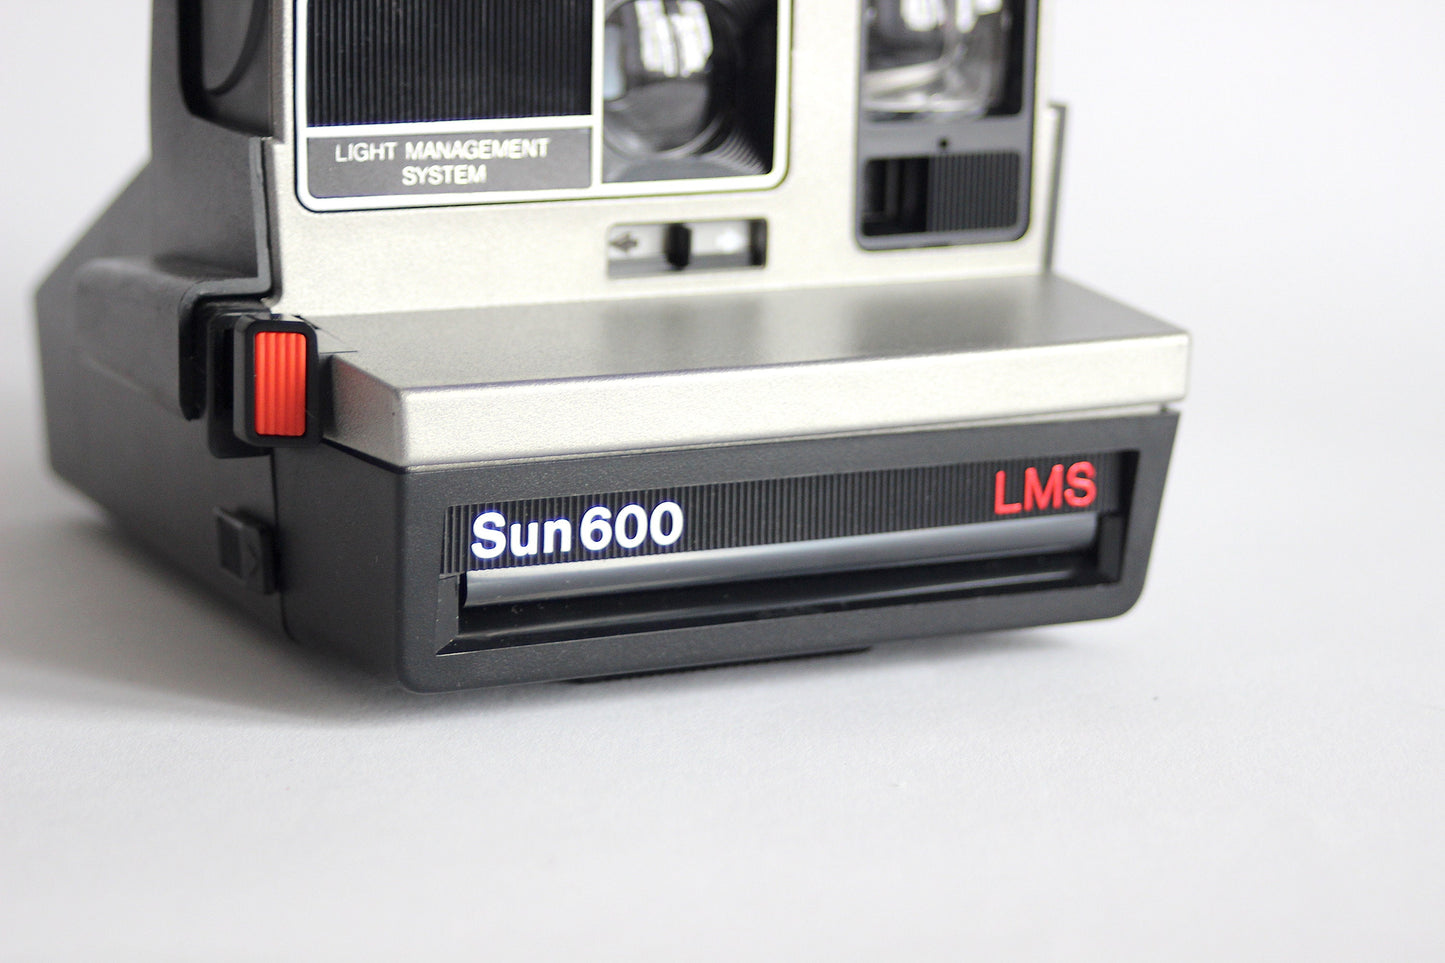 Polaroid Sun 600 LMS with original box